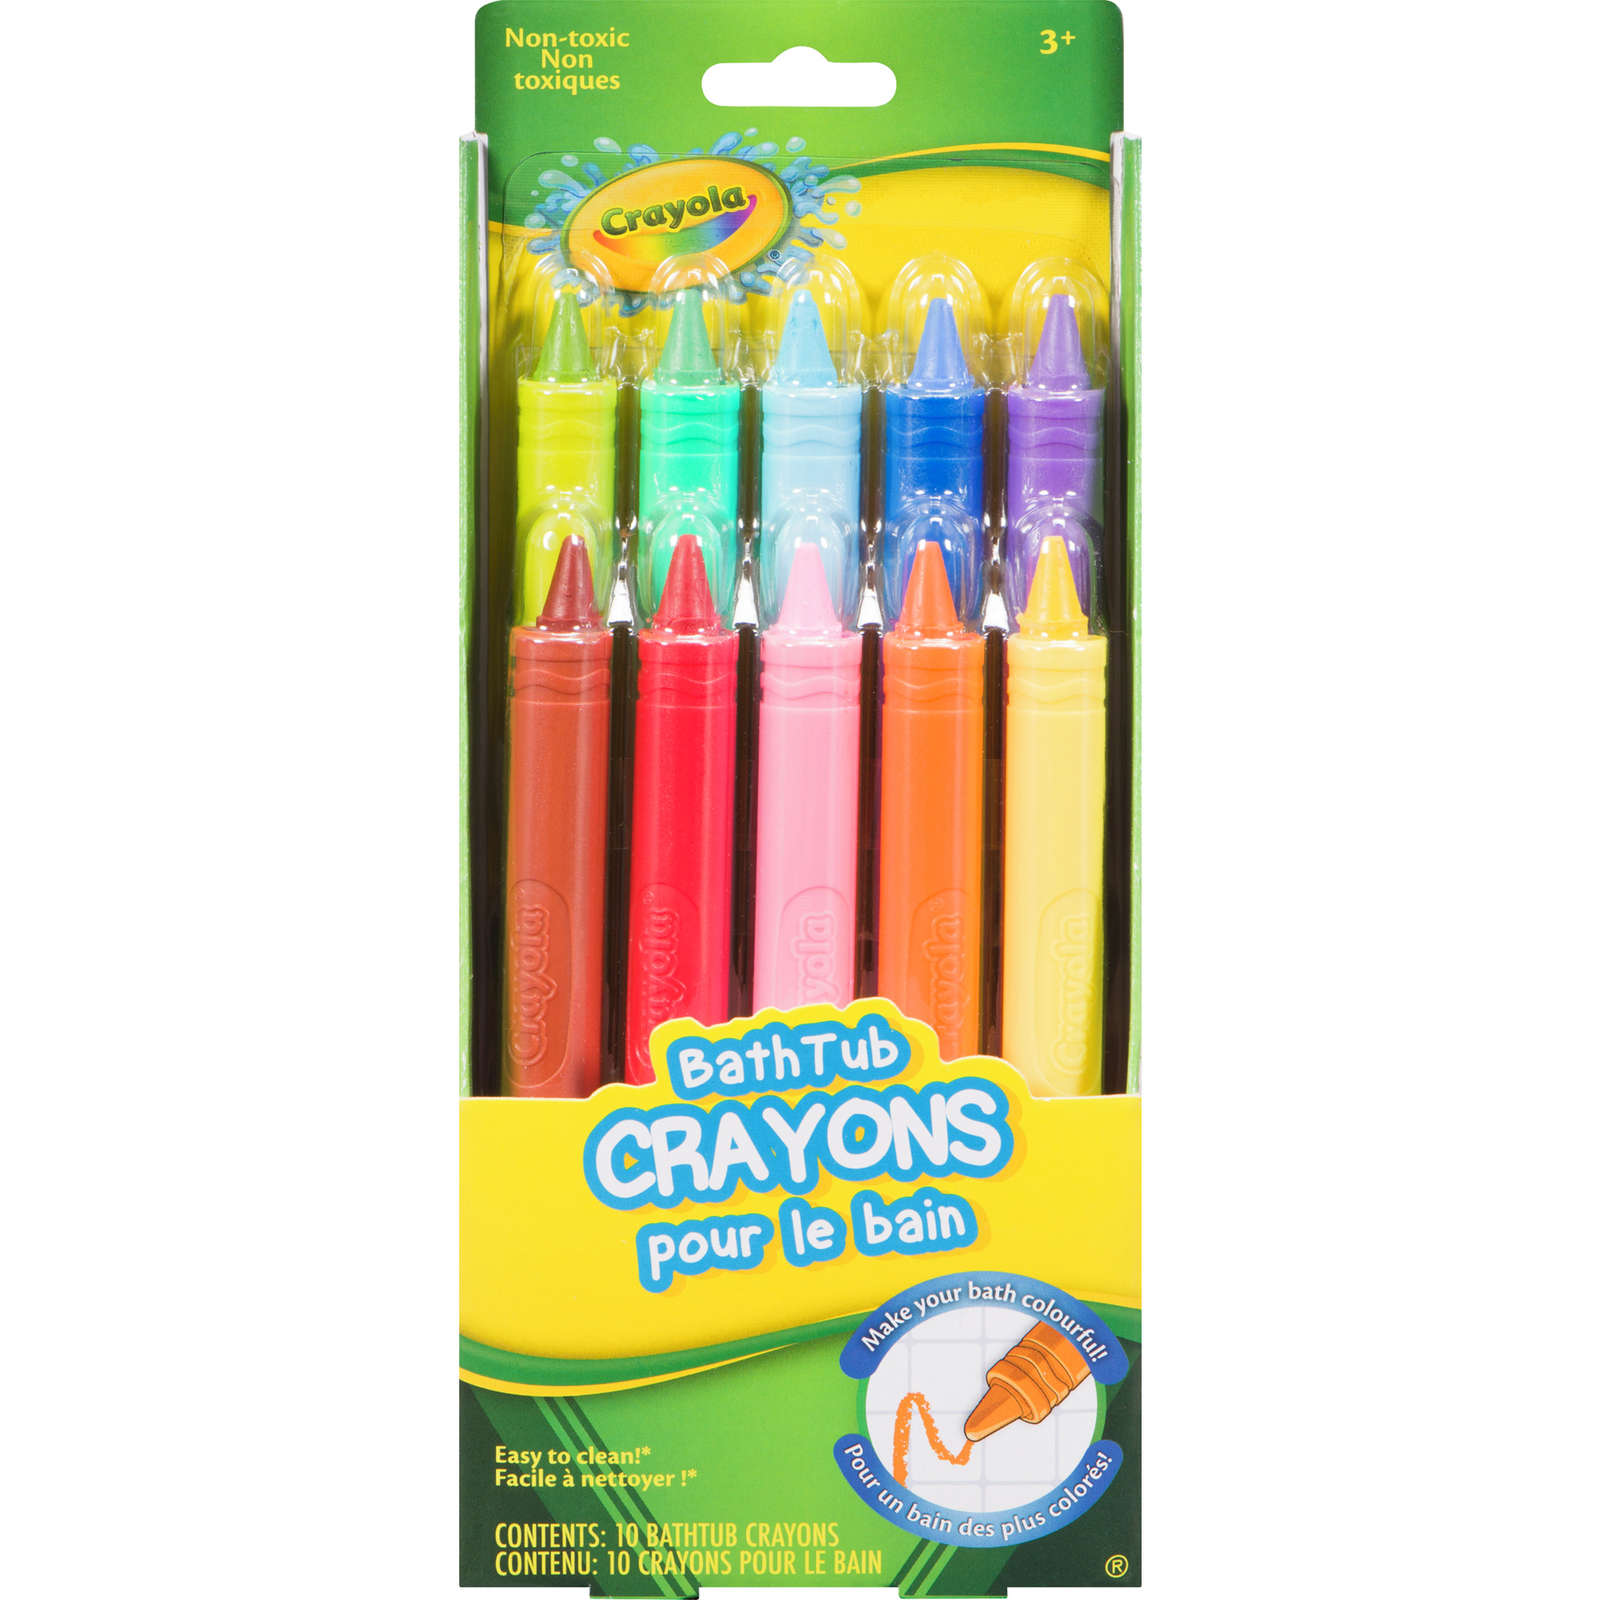 Stocking Stuffer Ideas - Bath Crayons